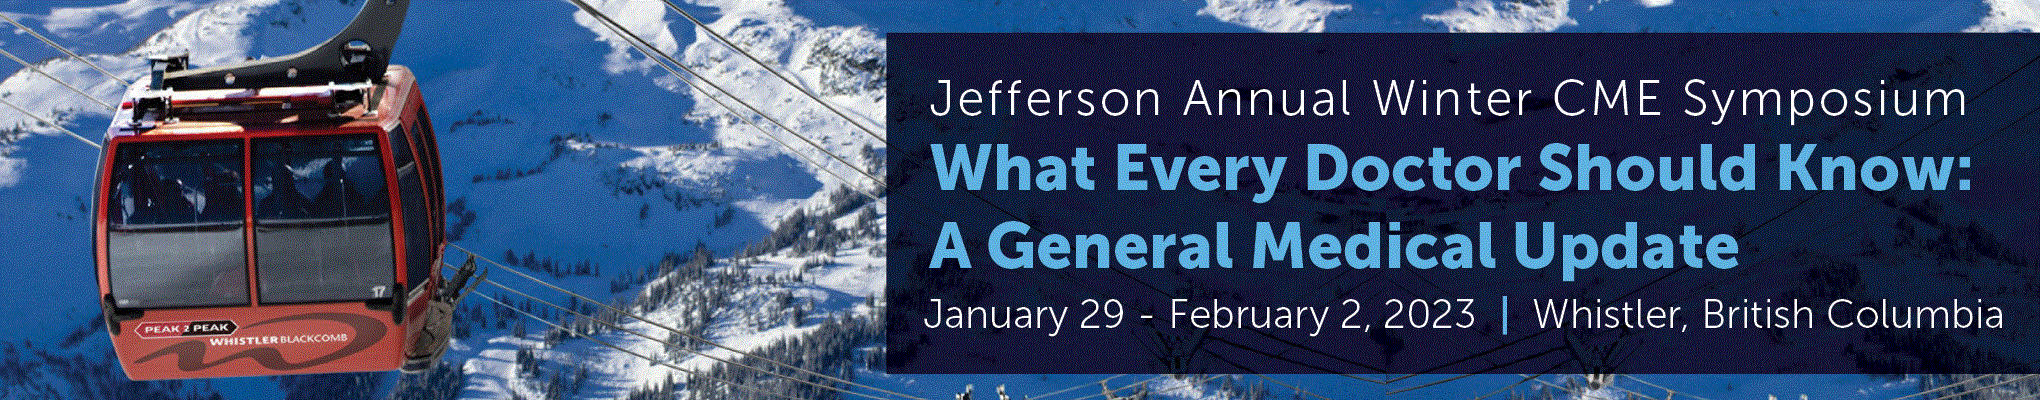 Jefferson Annual Winter CME Symposium Banner